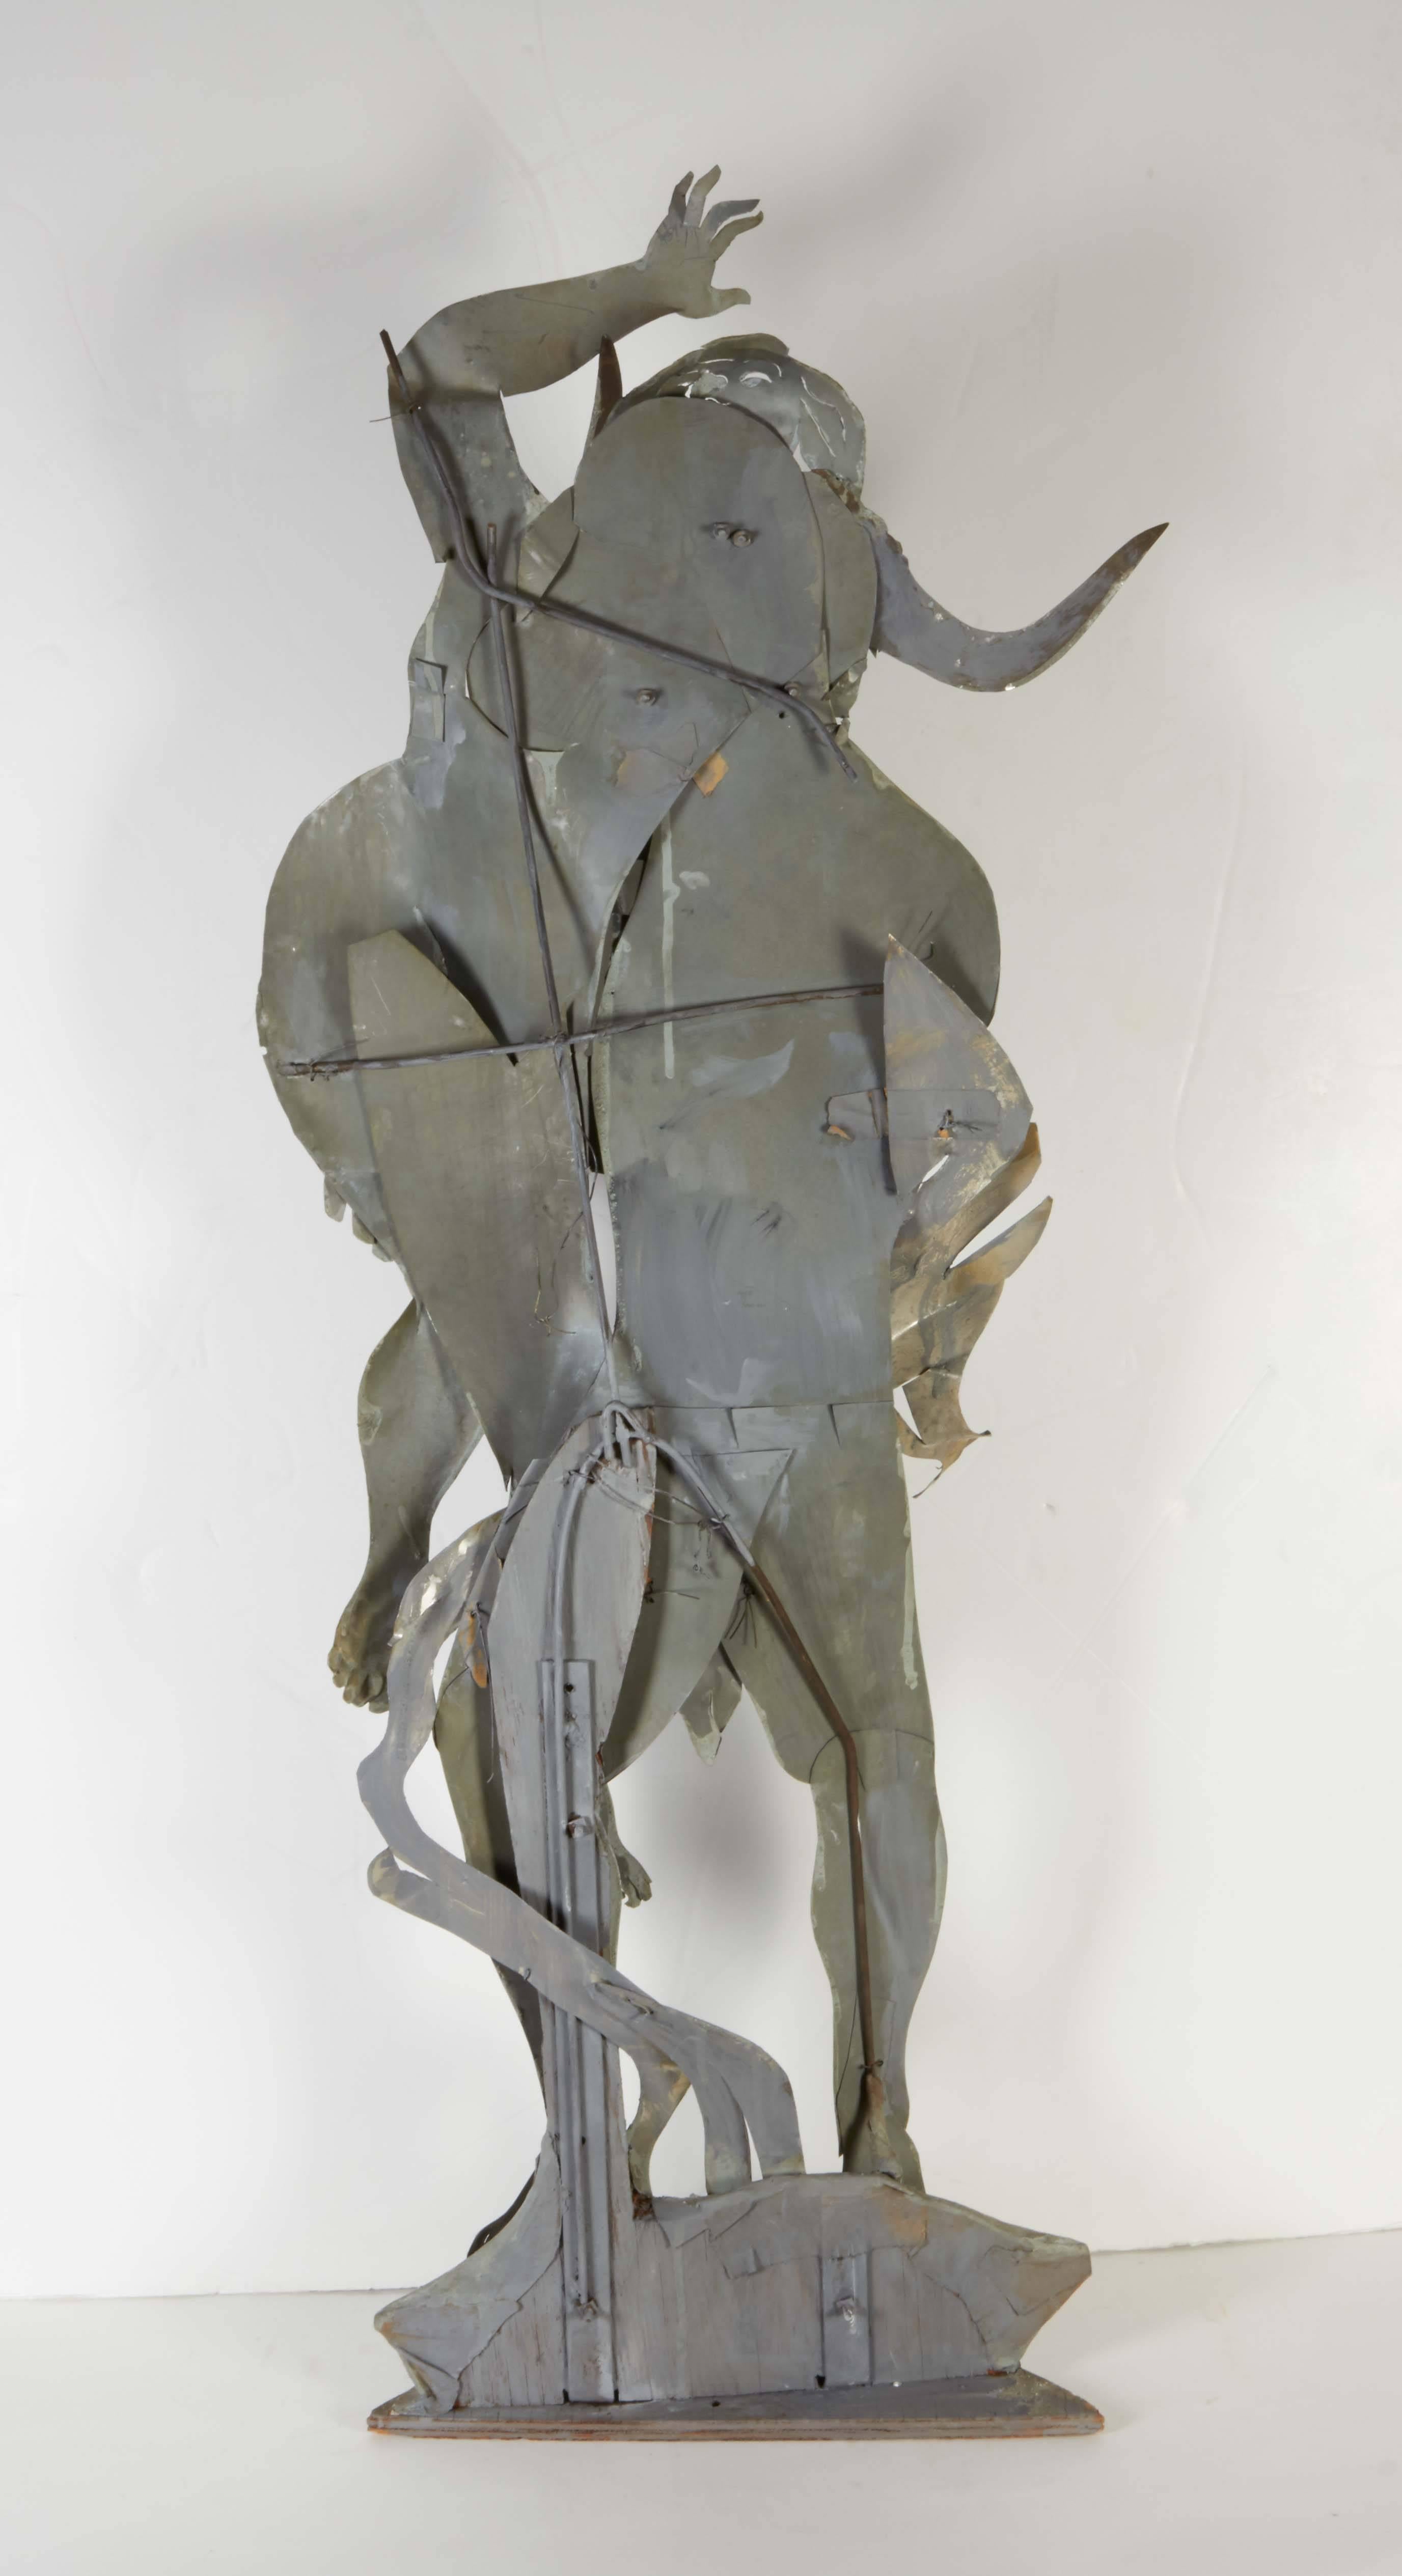 Modernist Sculpture of the Minotaur Abducting a Maiden 1